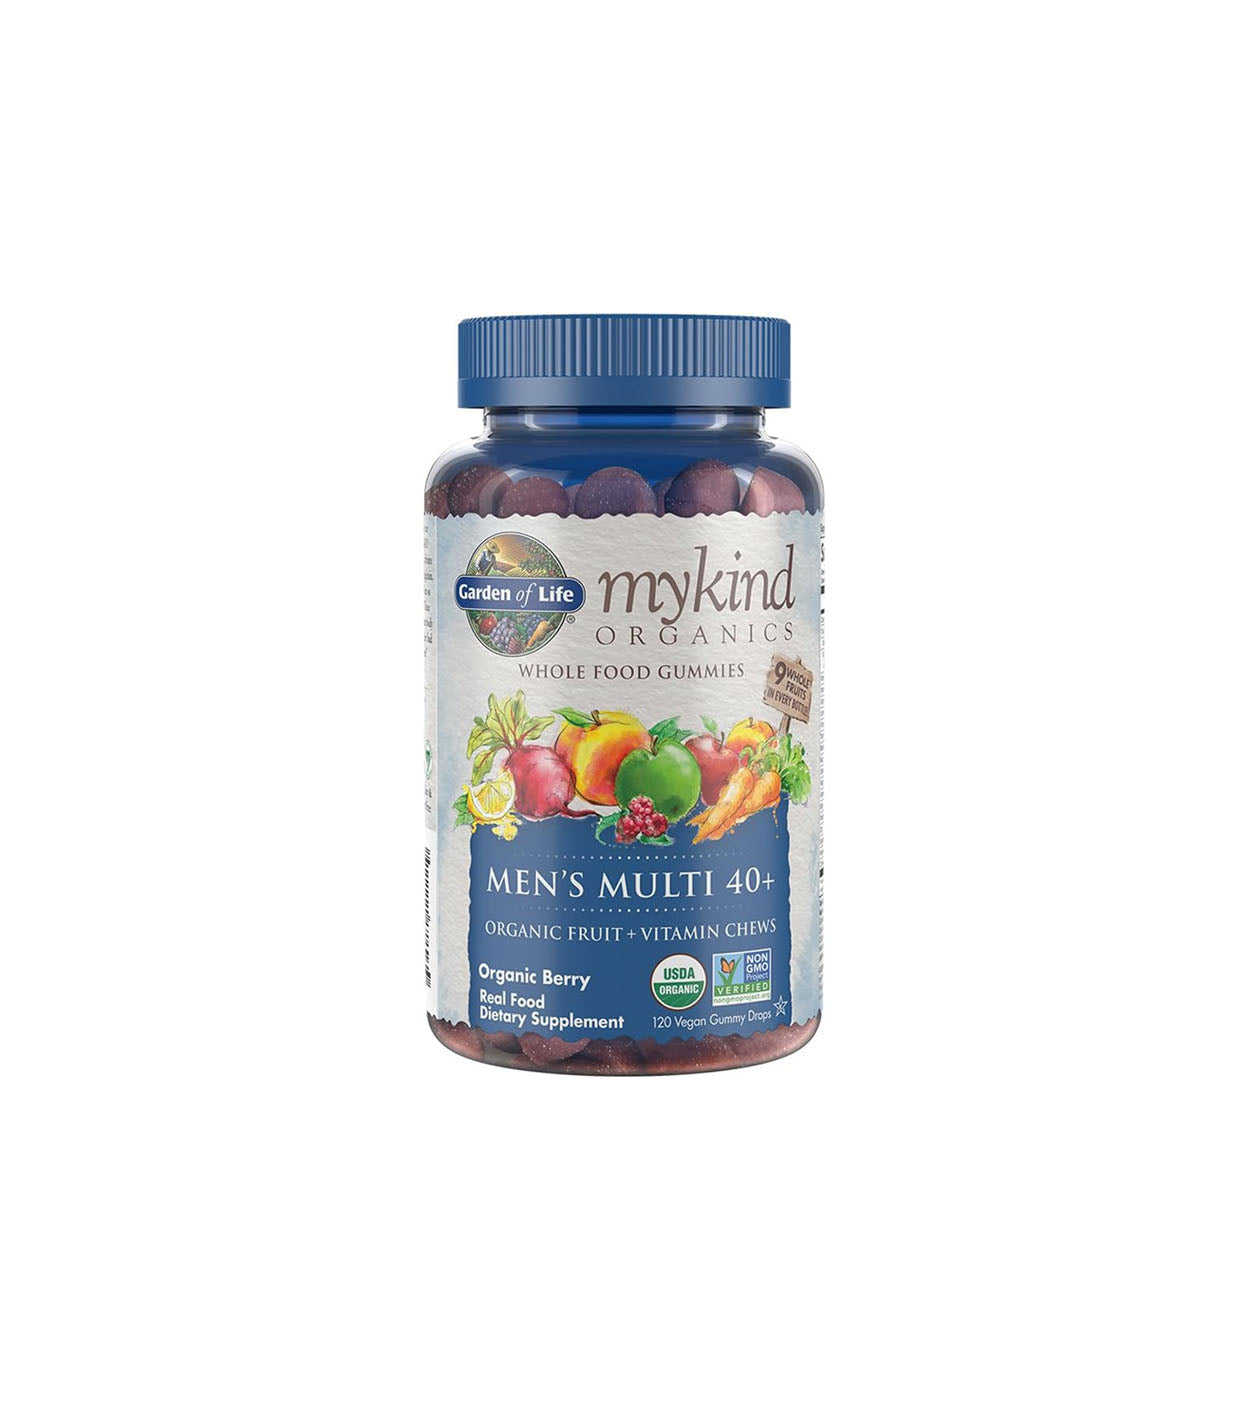 Garden of Life mykind Organics para Hombre 40+ gomitas vitaminas, 40+ Multi Berry, 120 unidades